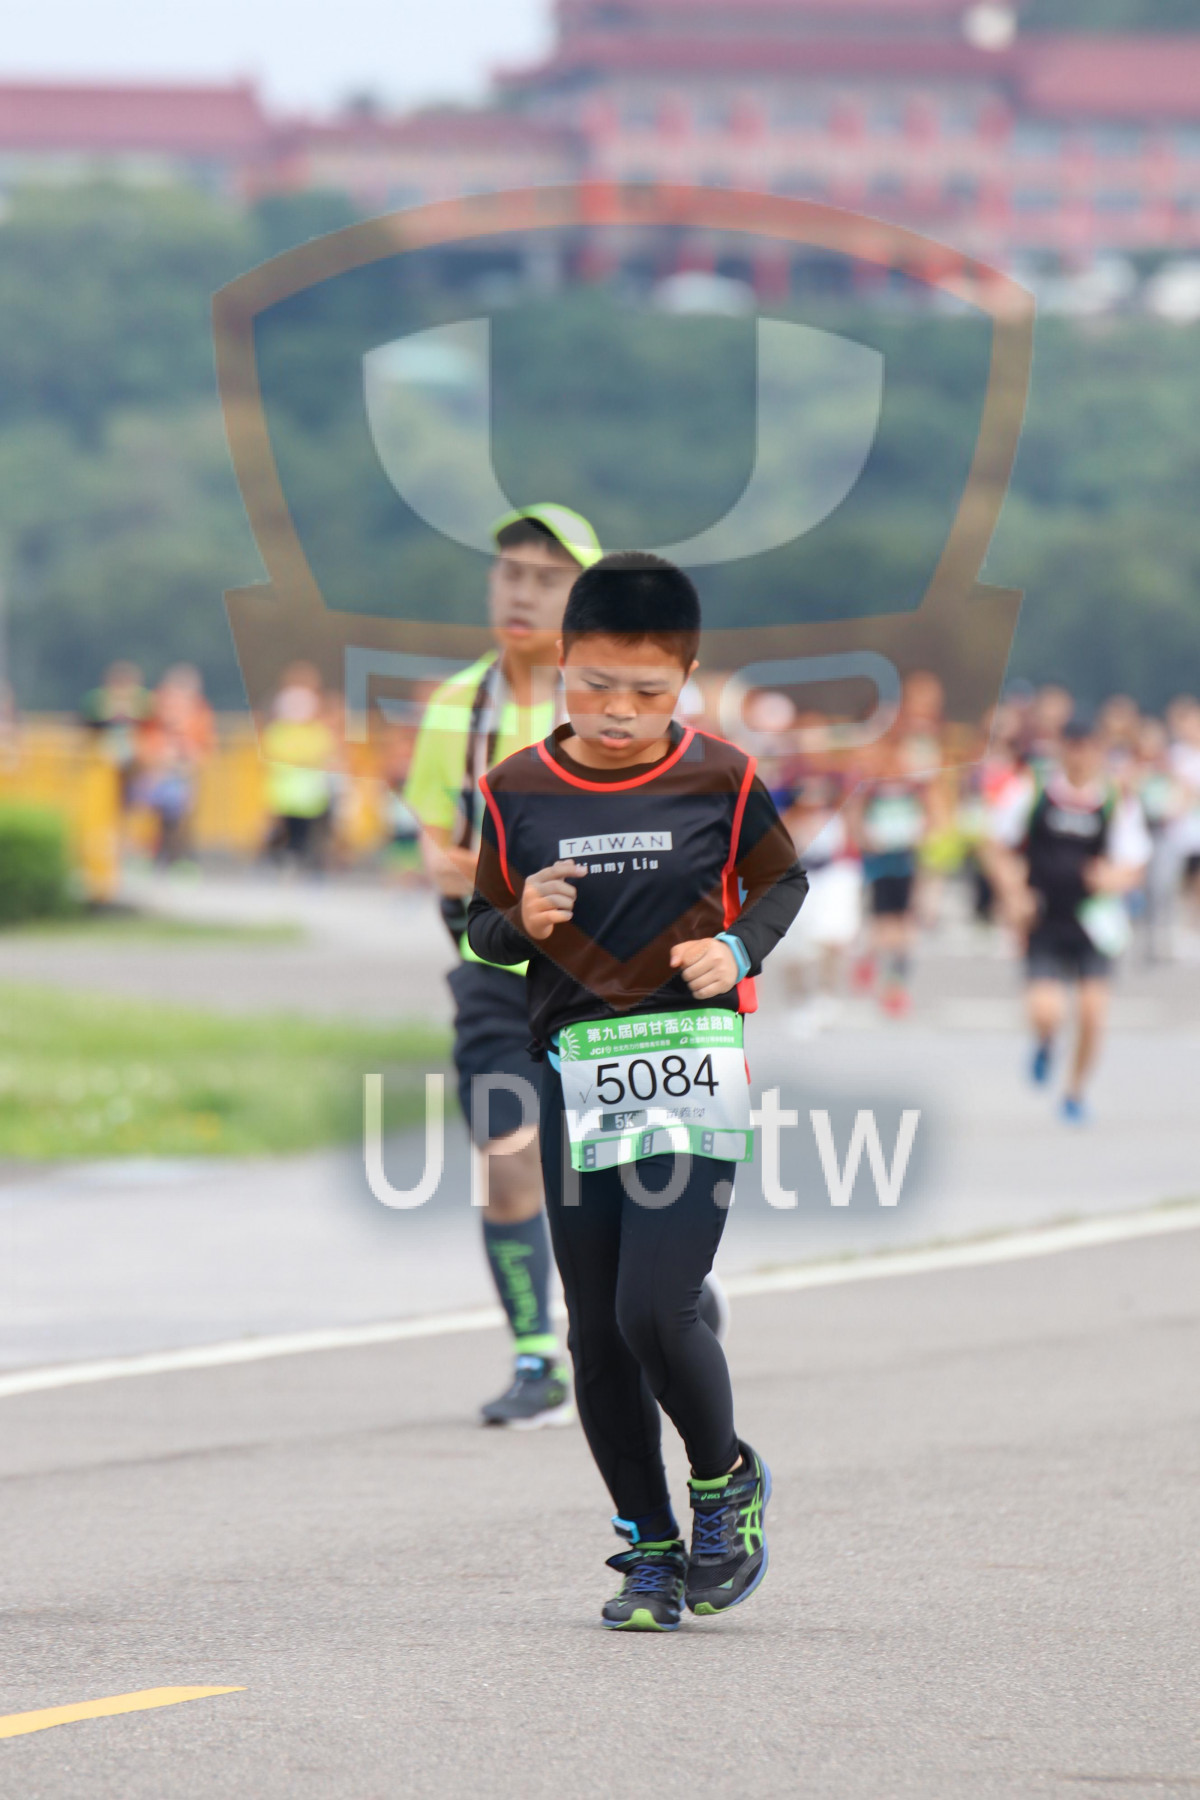 TAIWAN,,5084,5K|2018 第九屆阿甘盃公益路跑|Soryu Asuka Langley